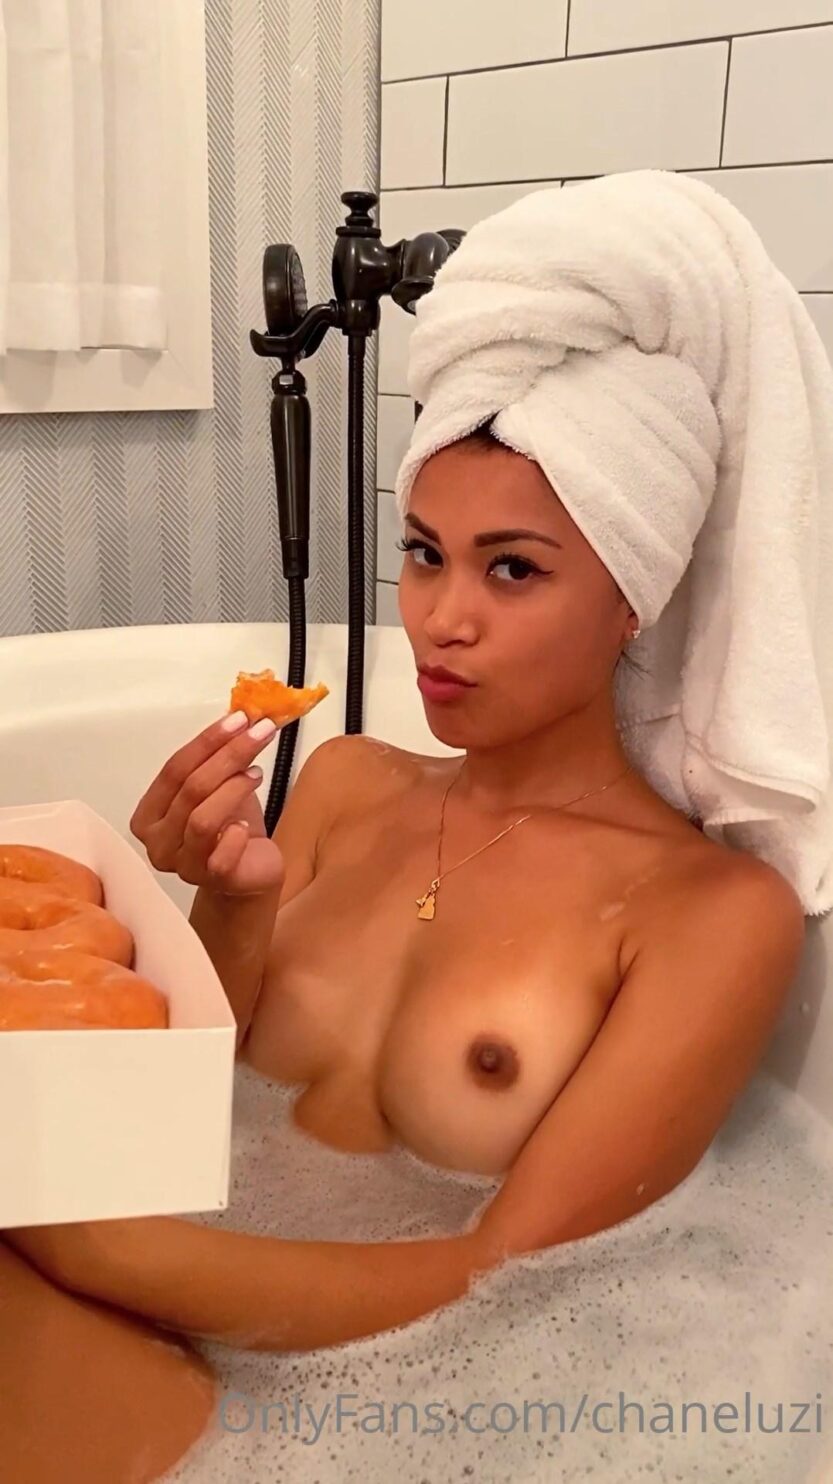 Leaked Nude Bathtub Chanel Uzi Video chanel uzi